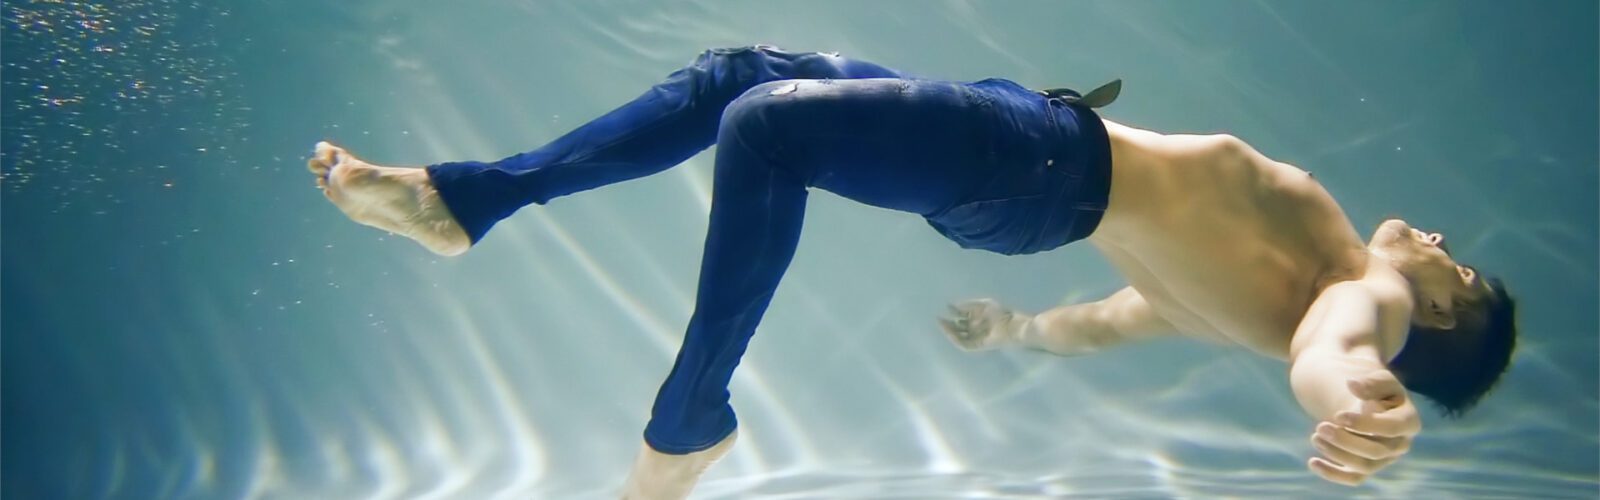 Swimming man in jeans, water-conscious denim